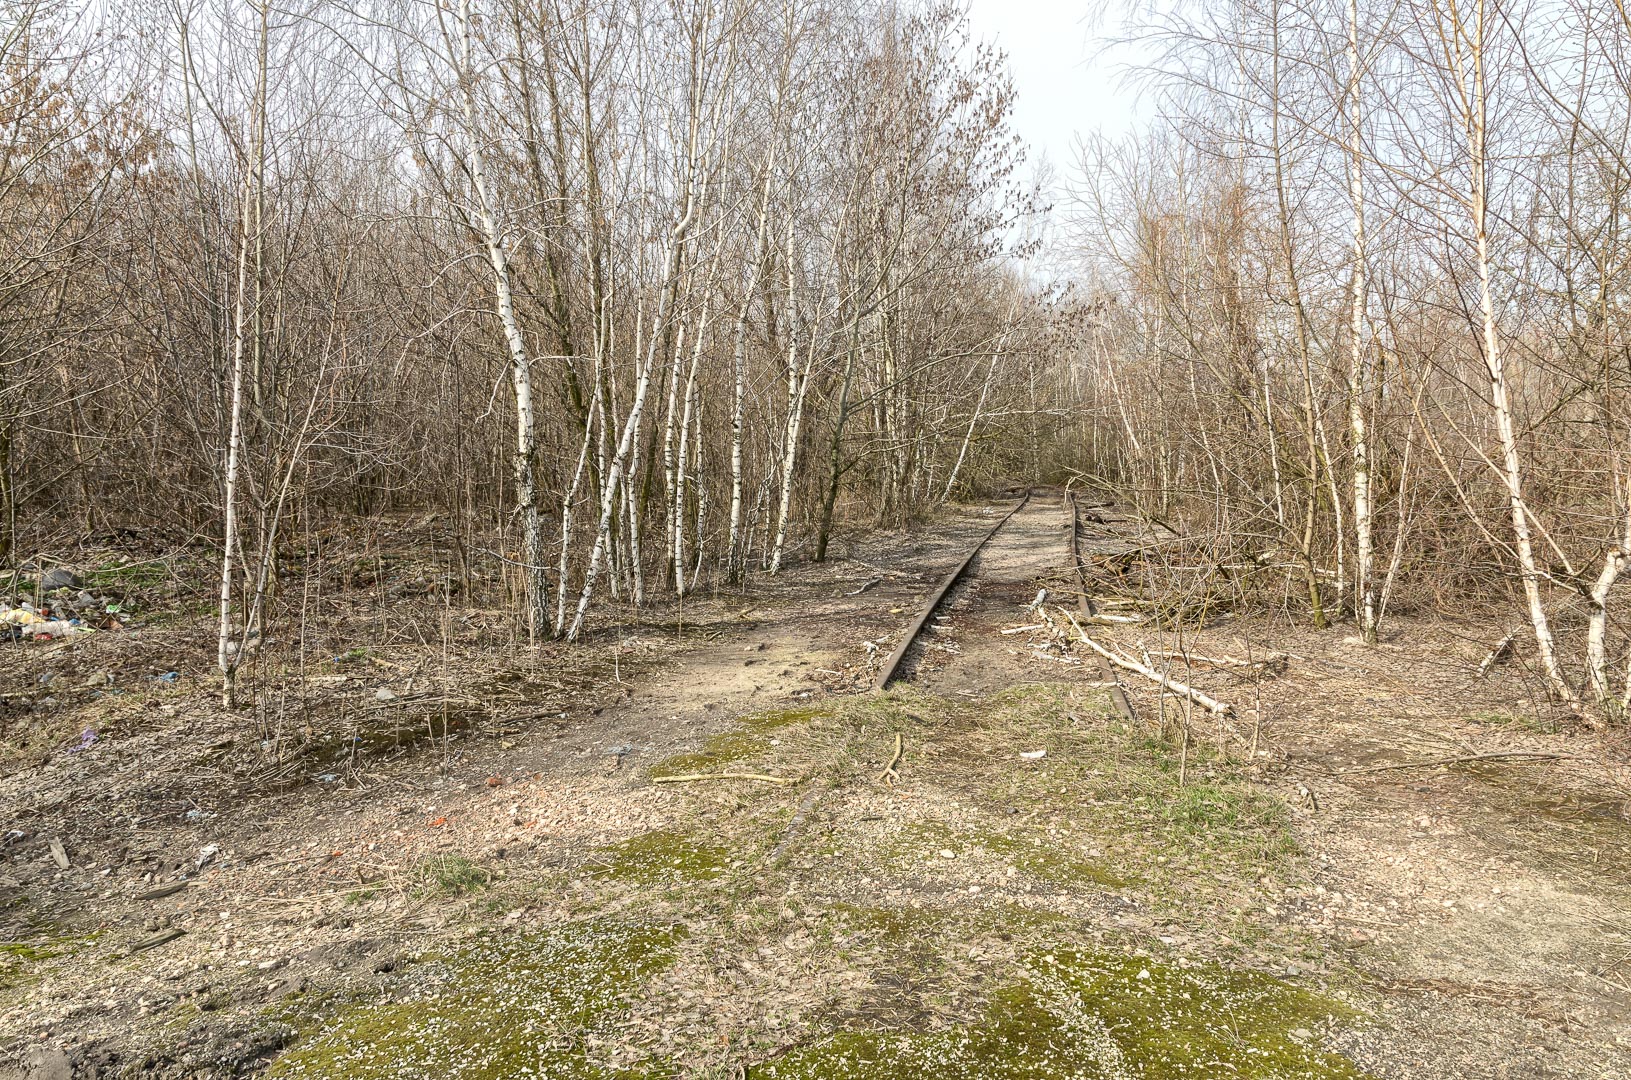 Backplate • ID: 3773 • HDRI Haven - Barren Terrain By Old Railway Track